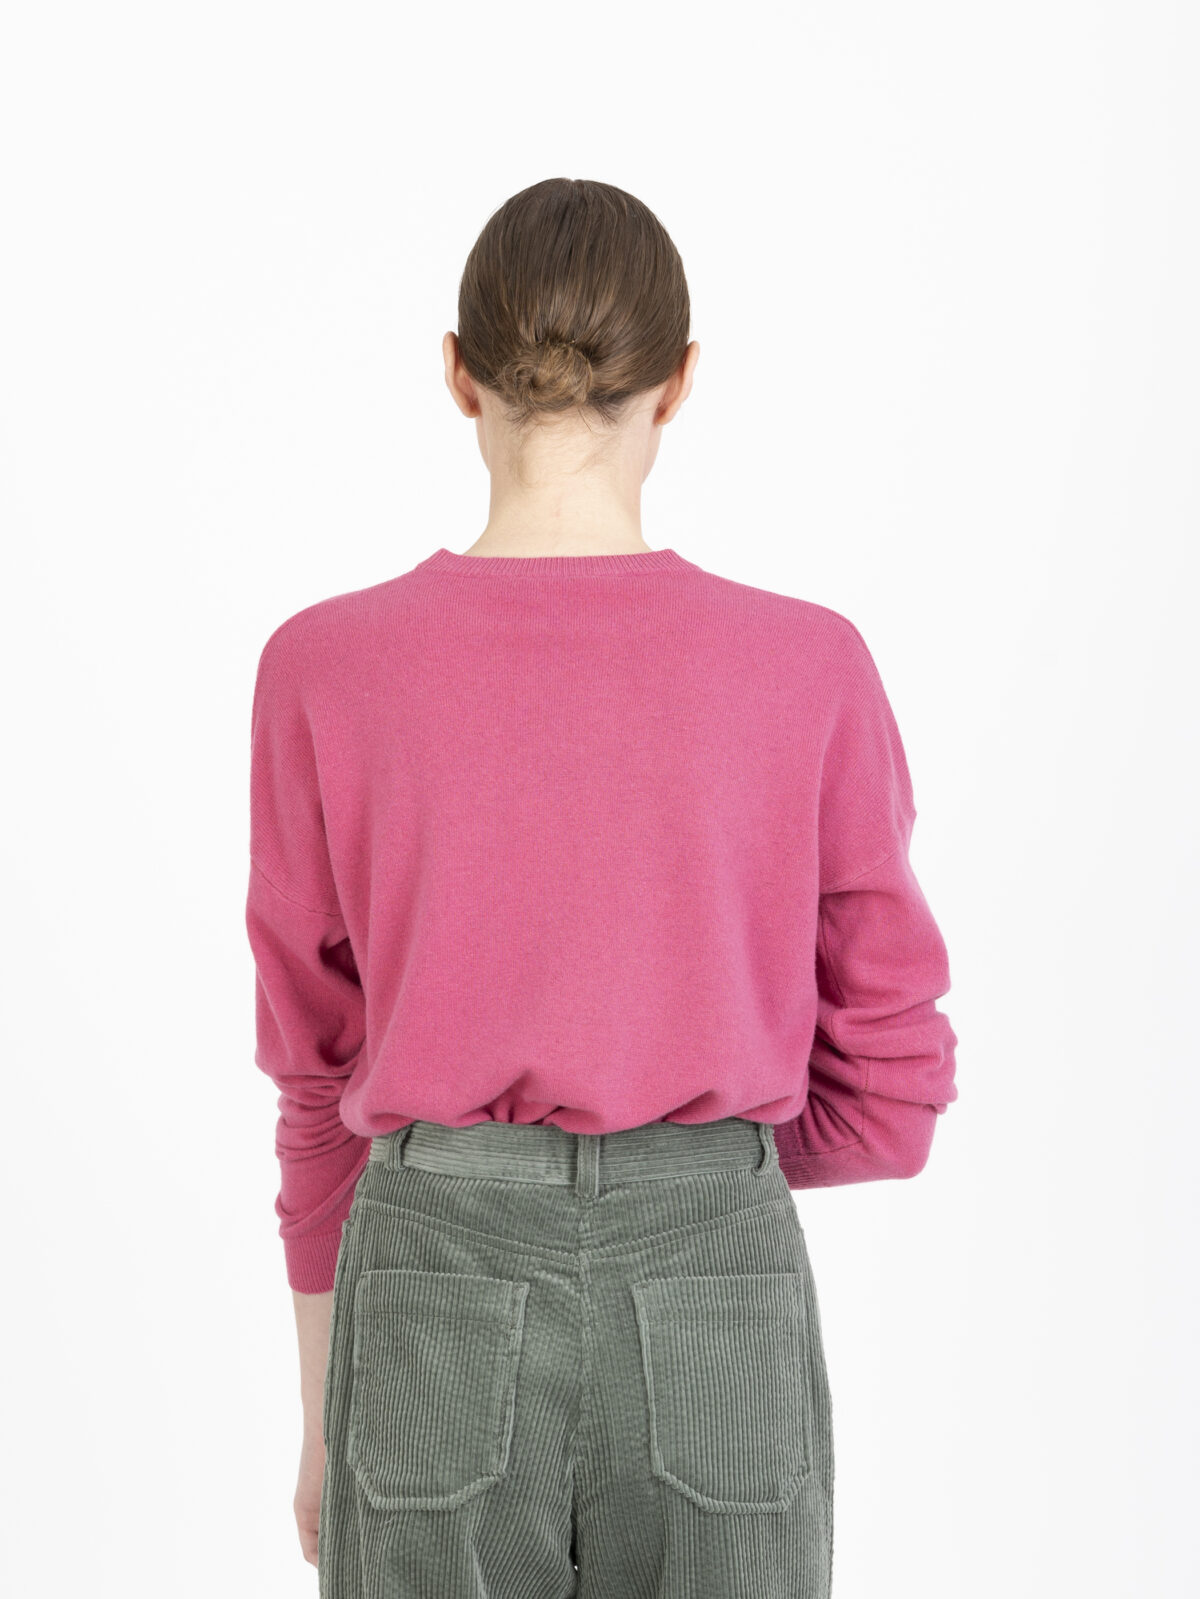 mostil-pink-round-neck-wool-sweater-crossley-matchboxathens